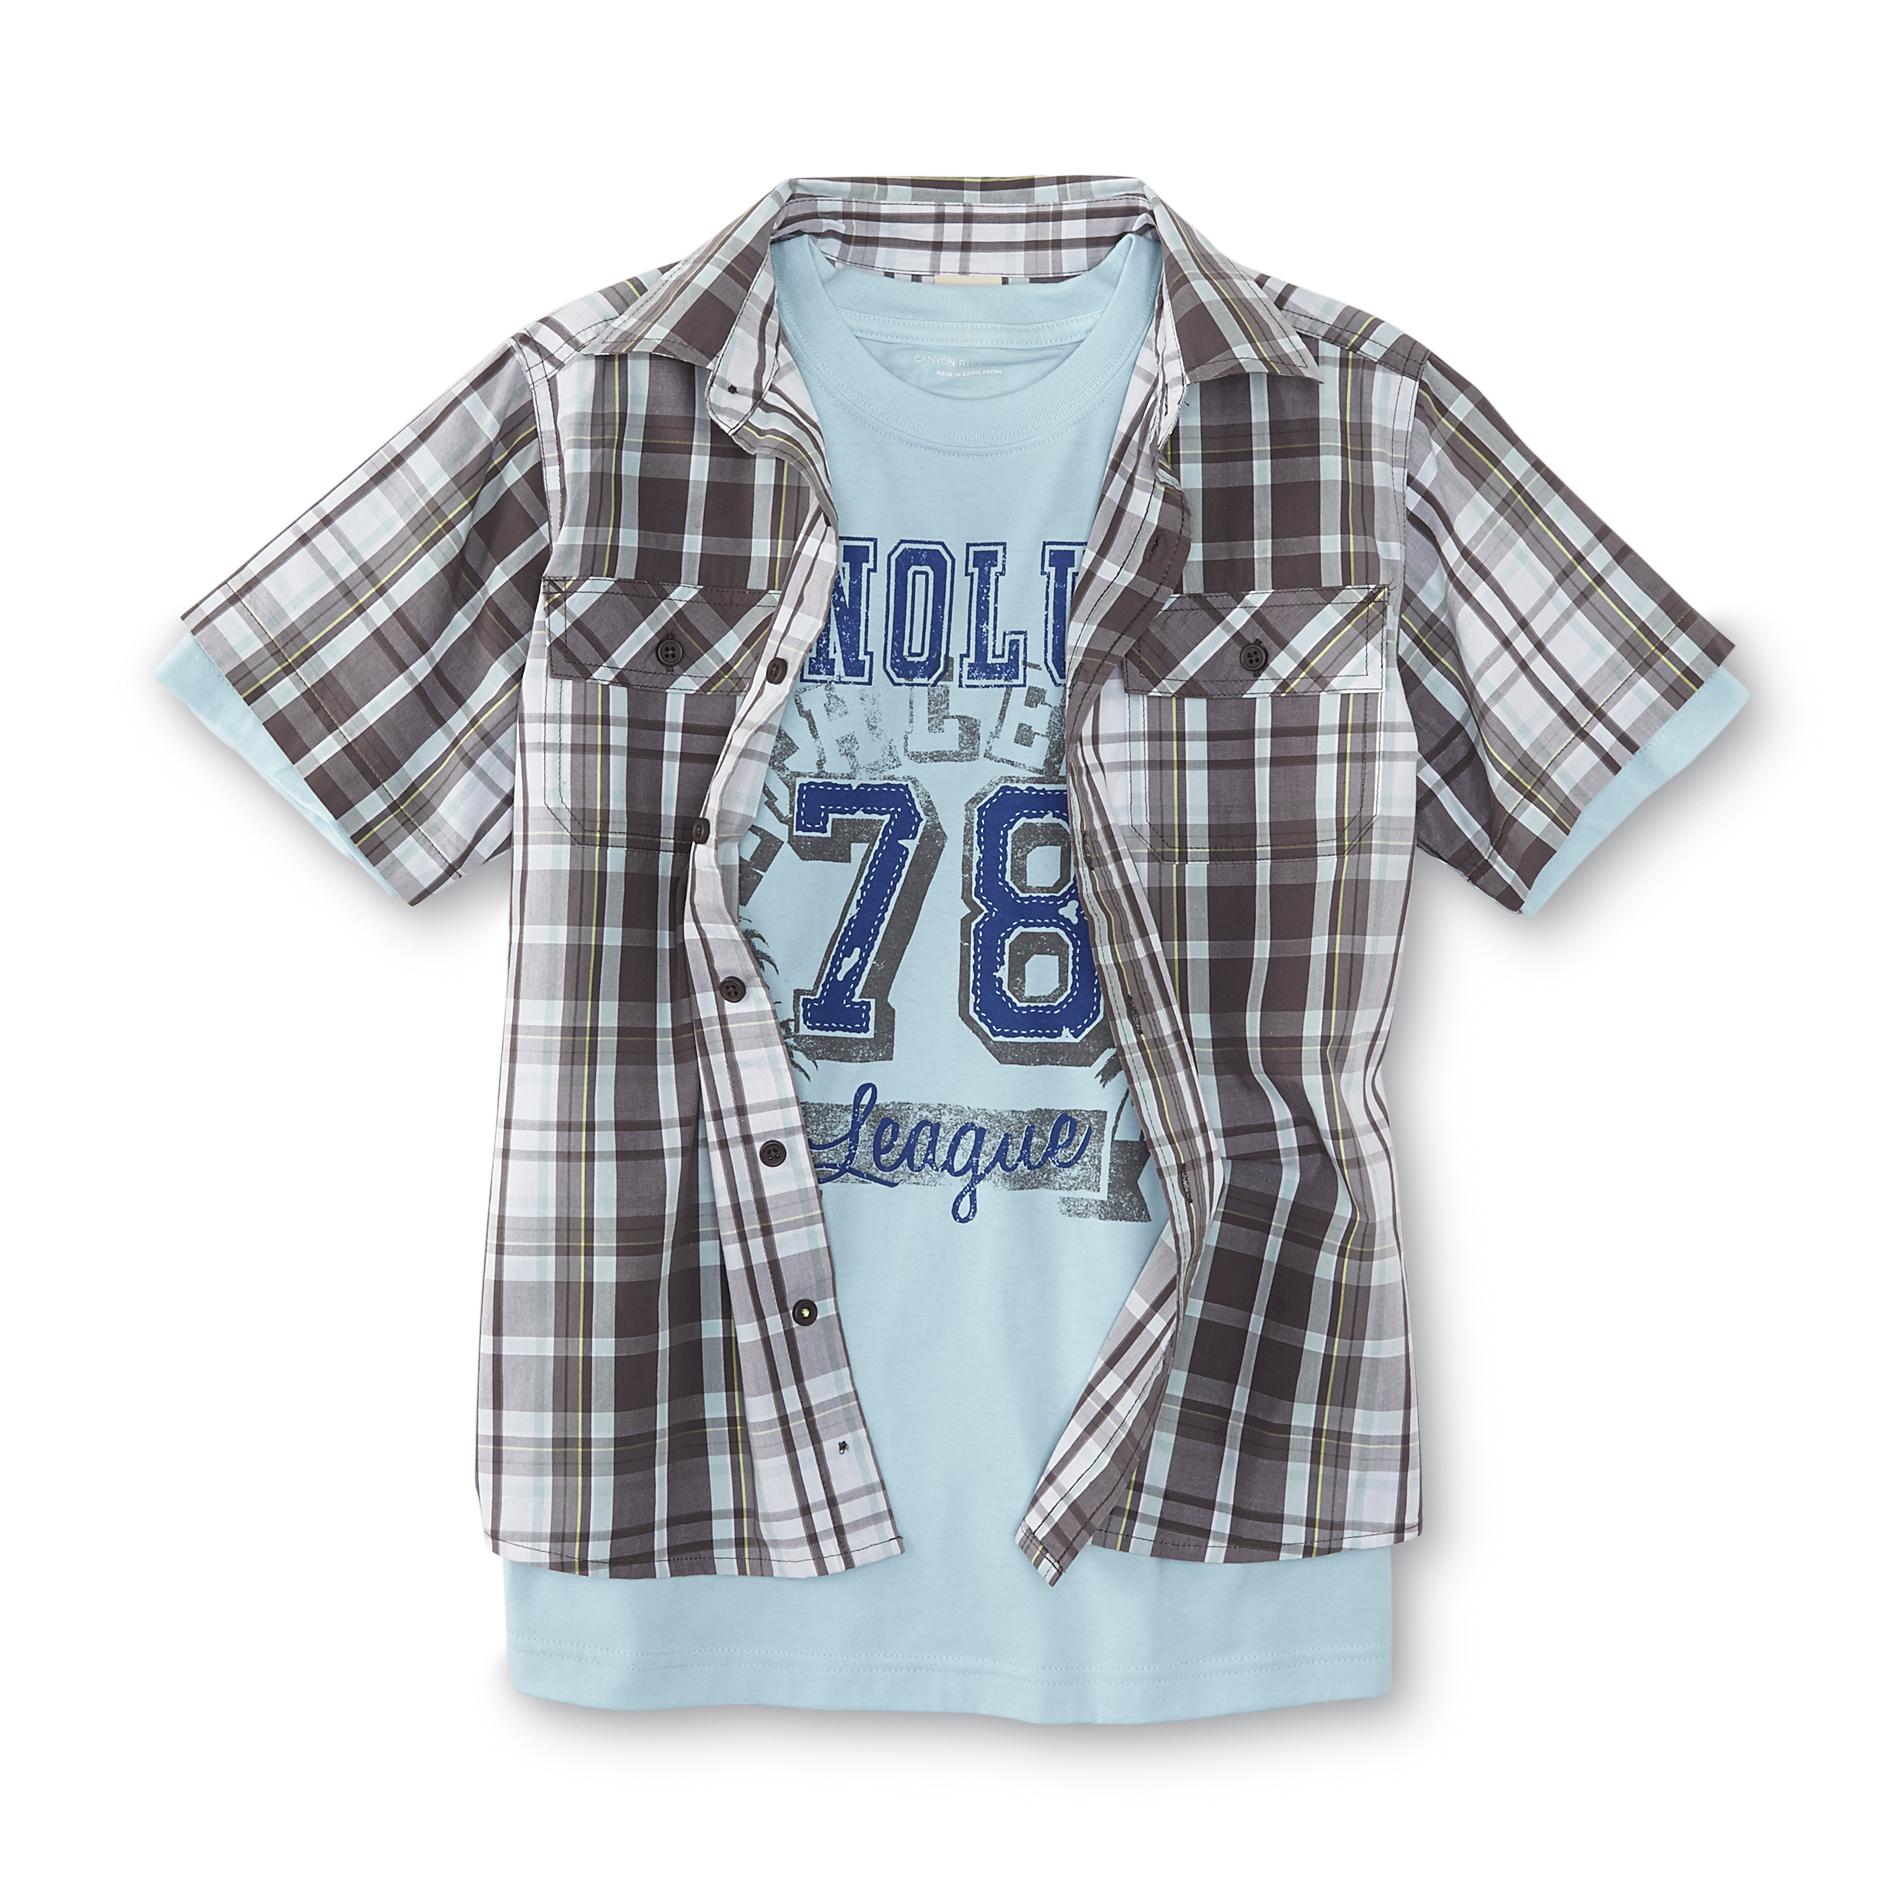 Canyon River Blues Boy's Woven Shirt & T-Shirt - Plaid